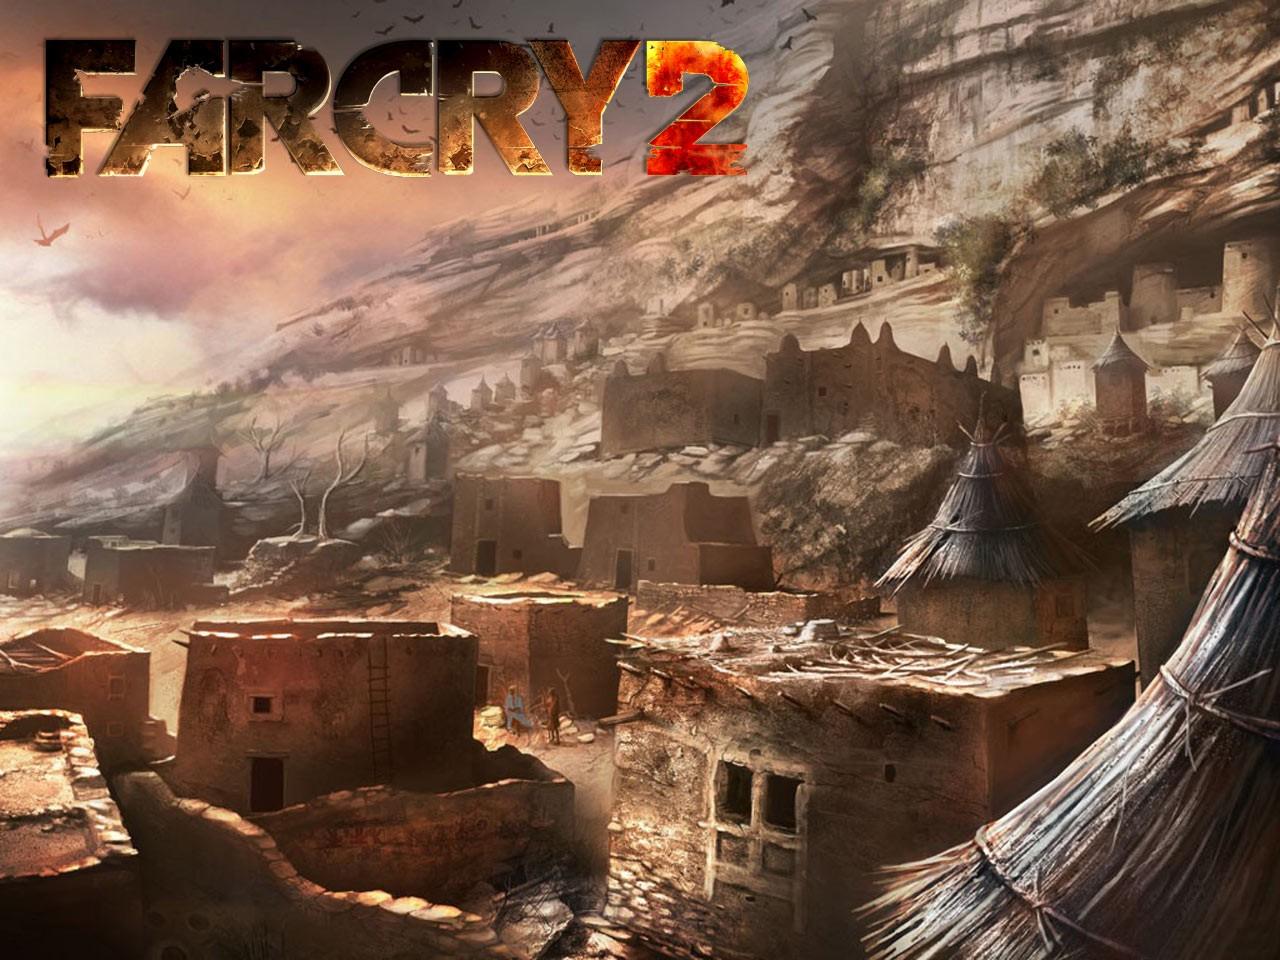 Far Cry 2 Wallpaper. HCL